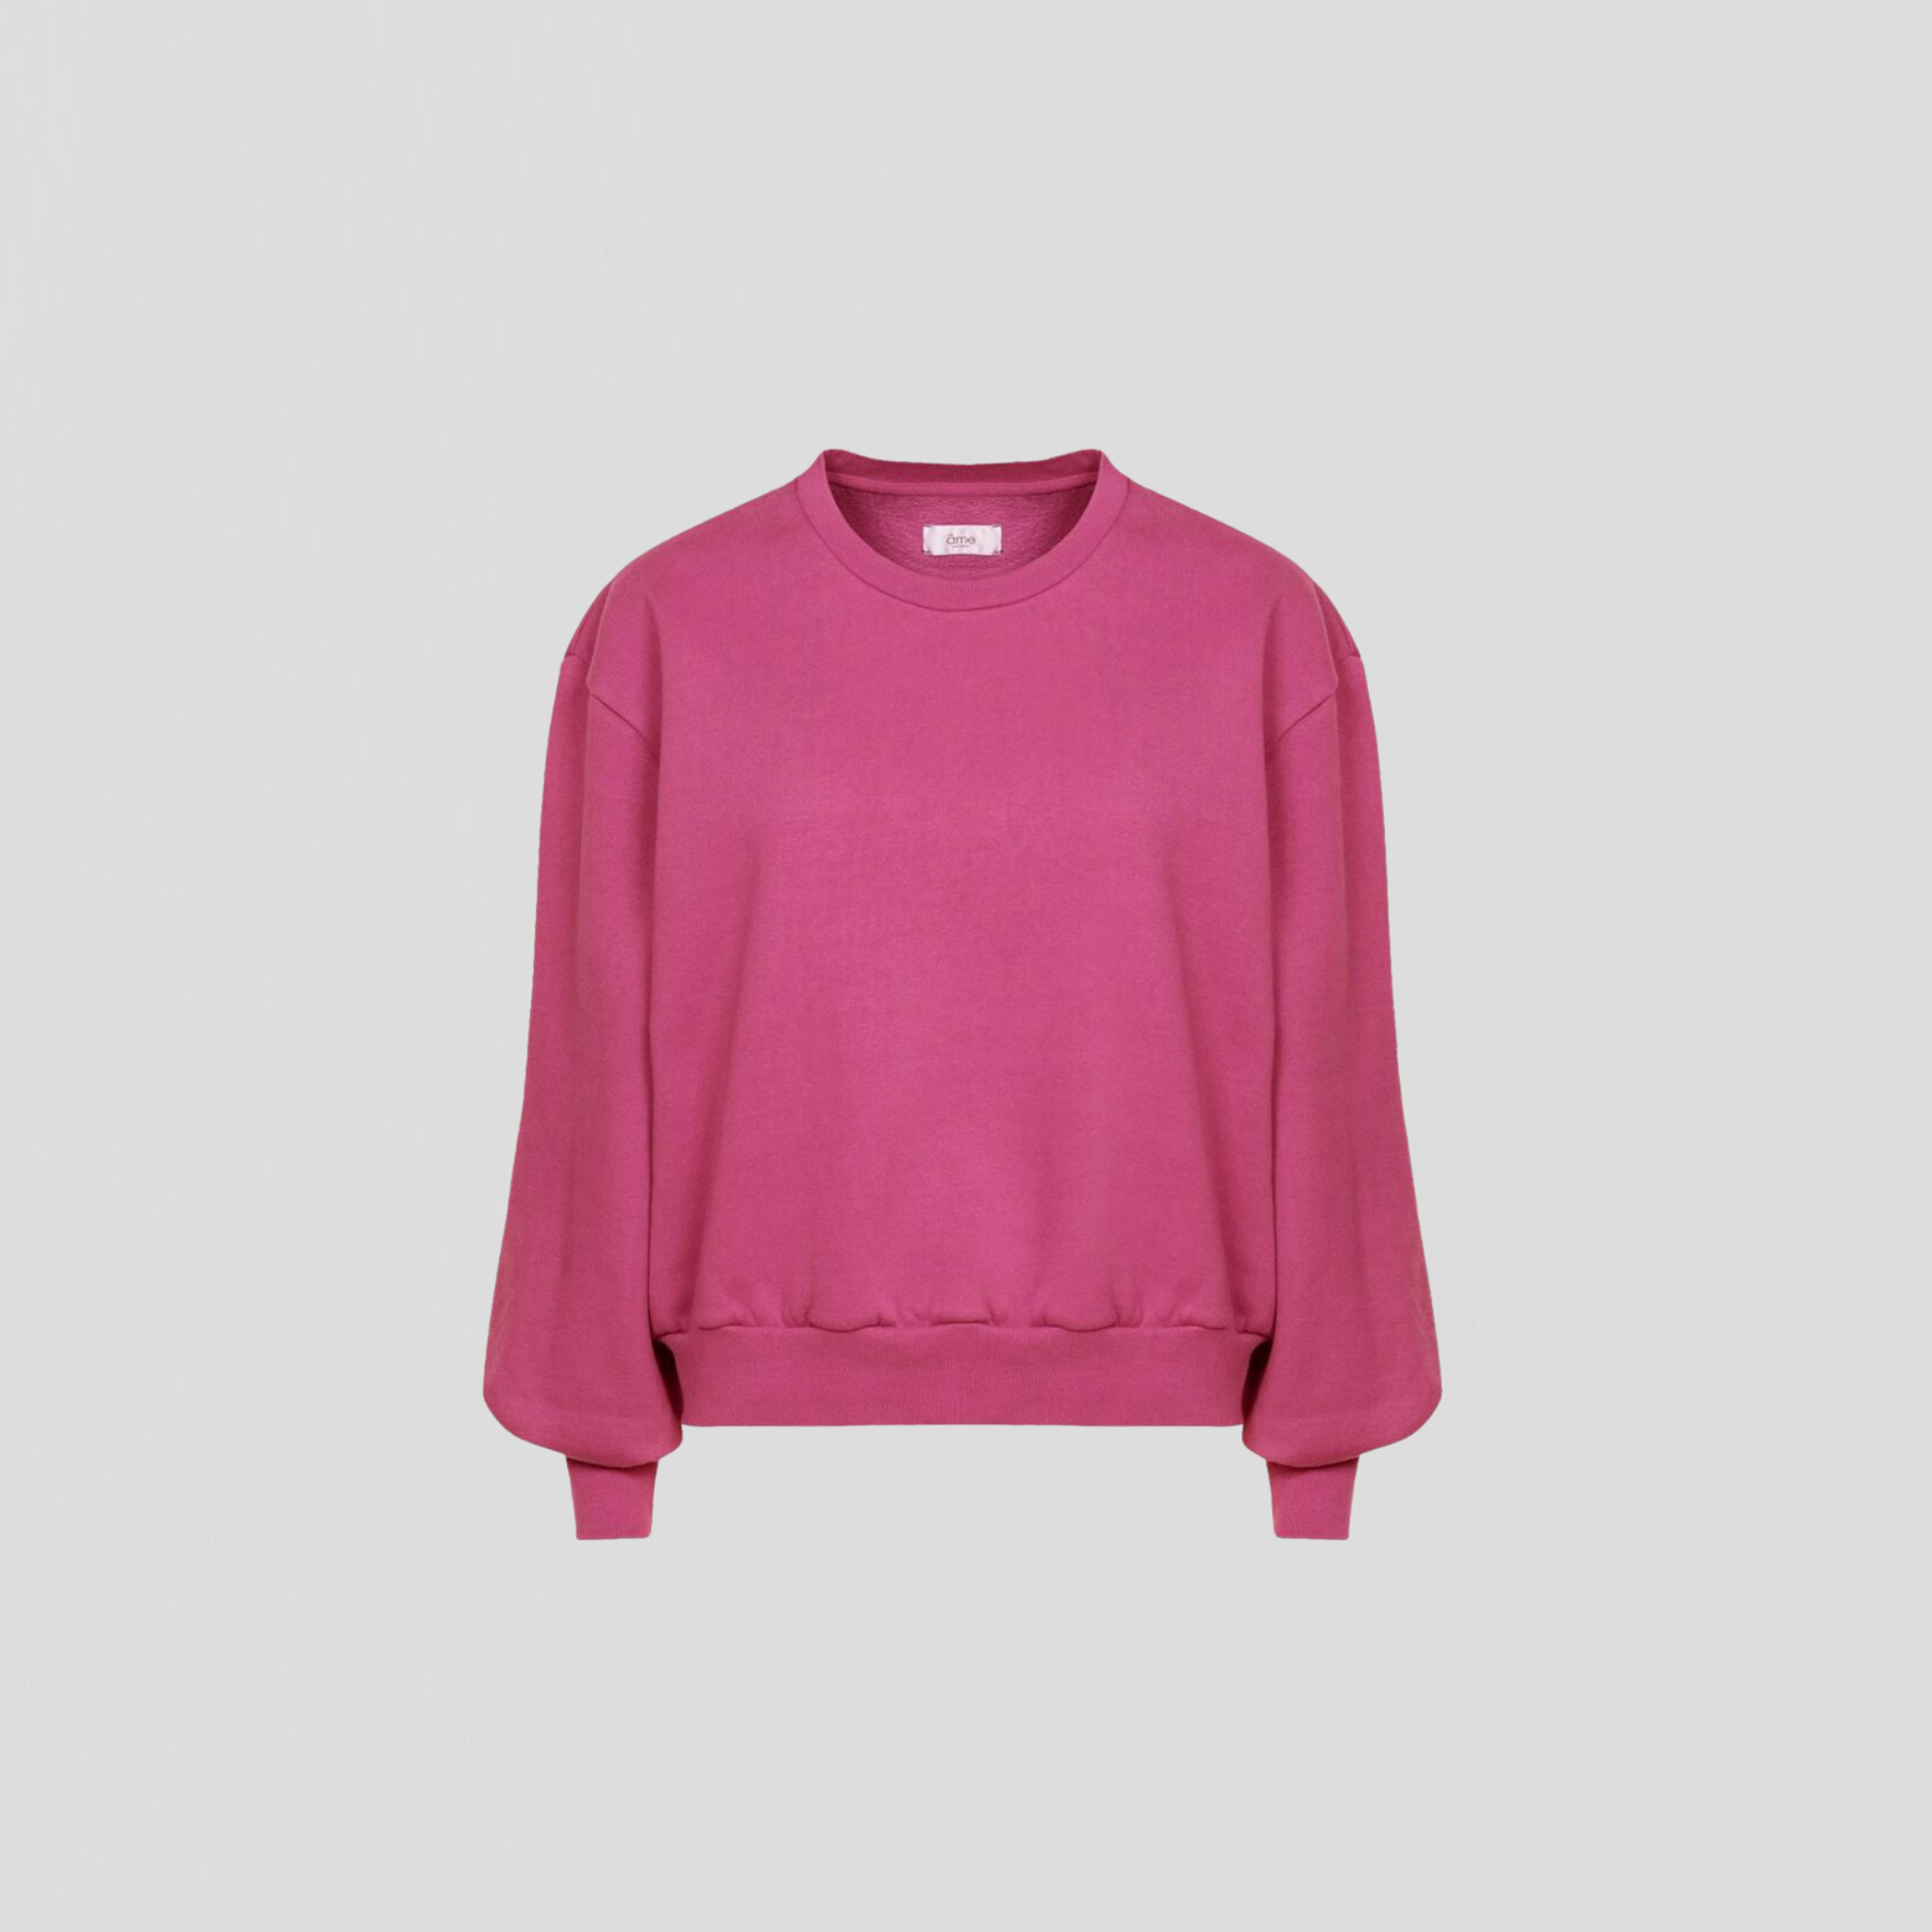 Âme Clemence Sweatshirt Bright Pink